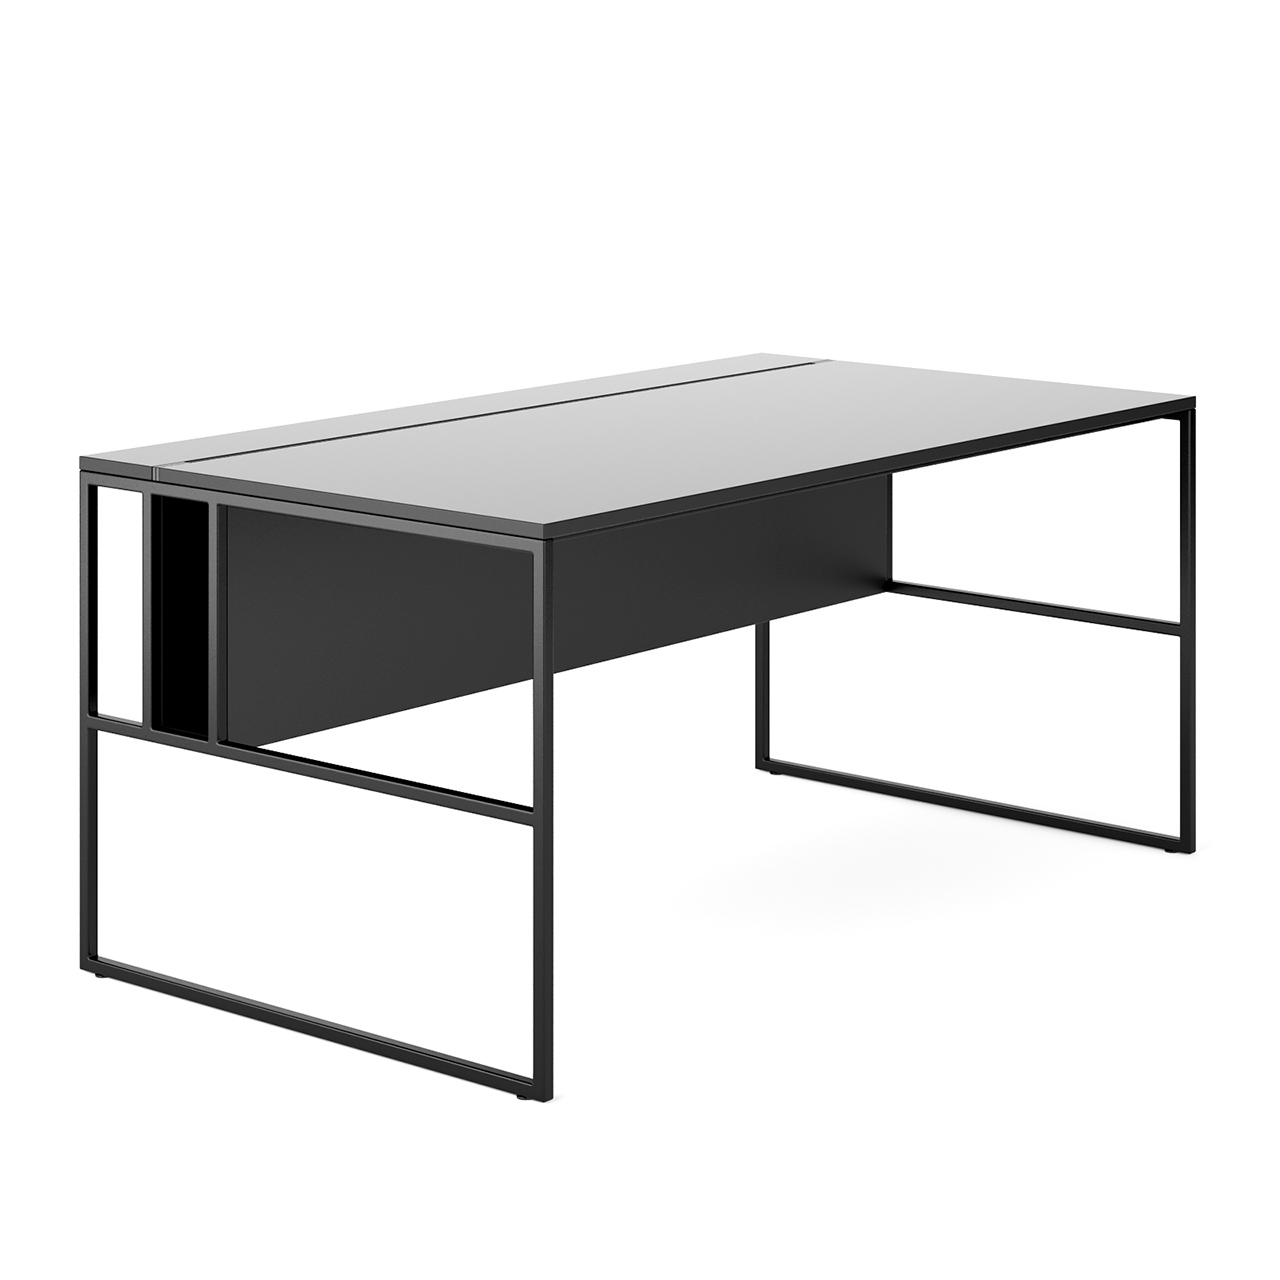 Venti Single Office Elegant Desk ☞ Structure: Matt Painted Graphite Grey X054 ☞ Top: Fenix Matt White X020 ☞ Dimensions: Width 200 cm